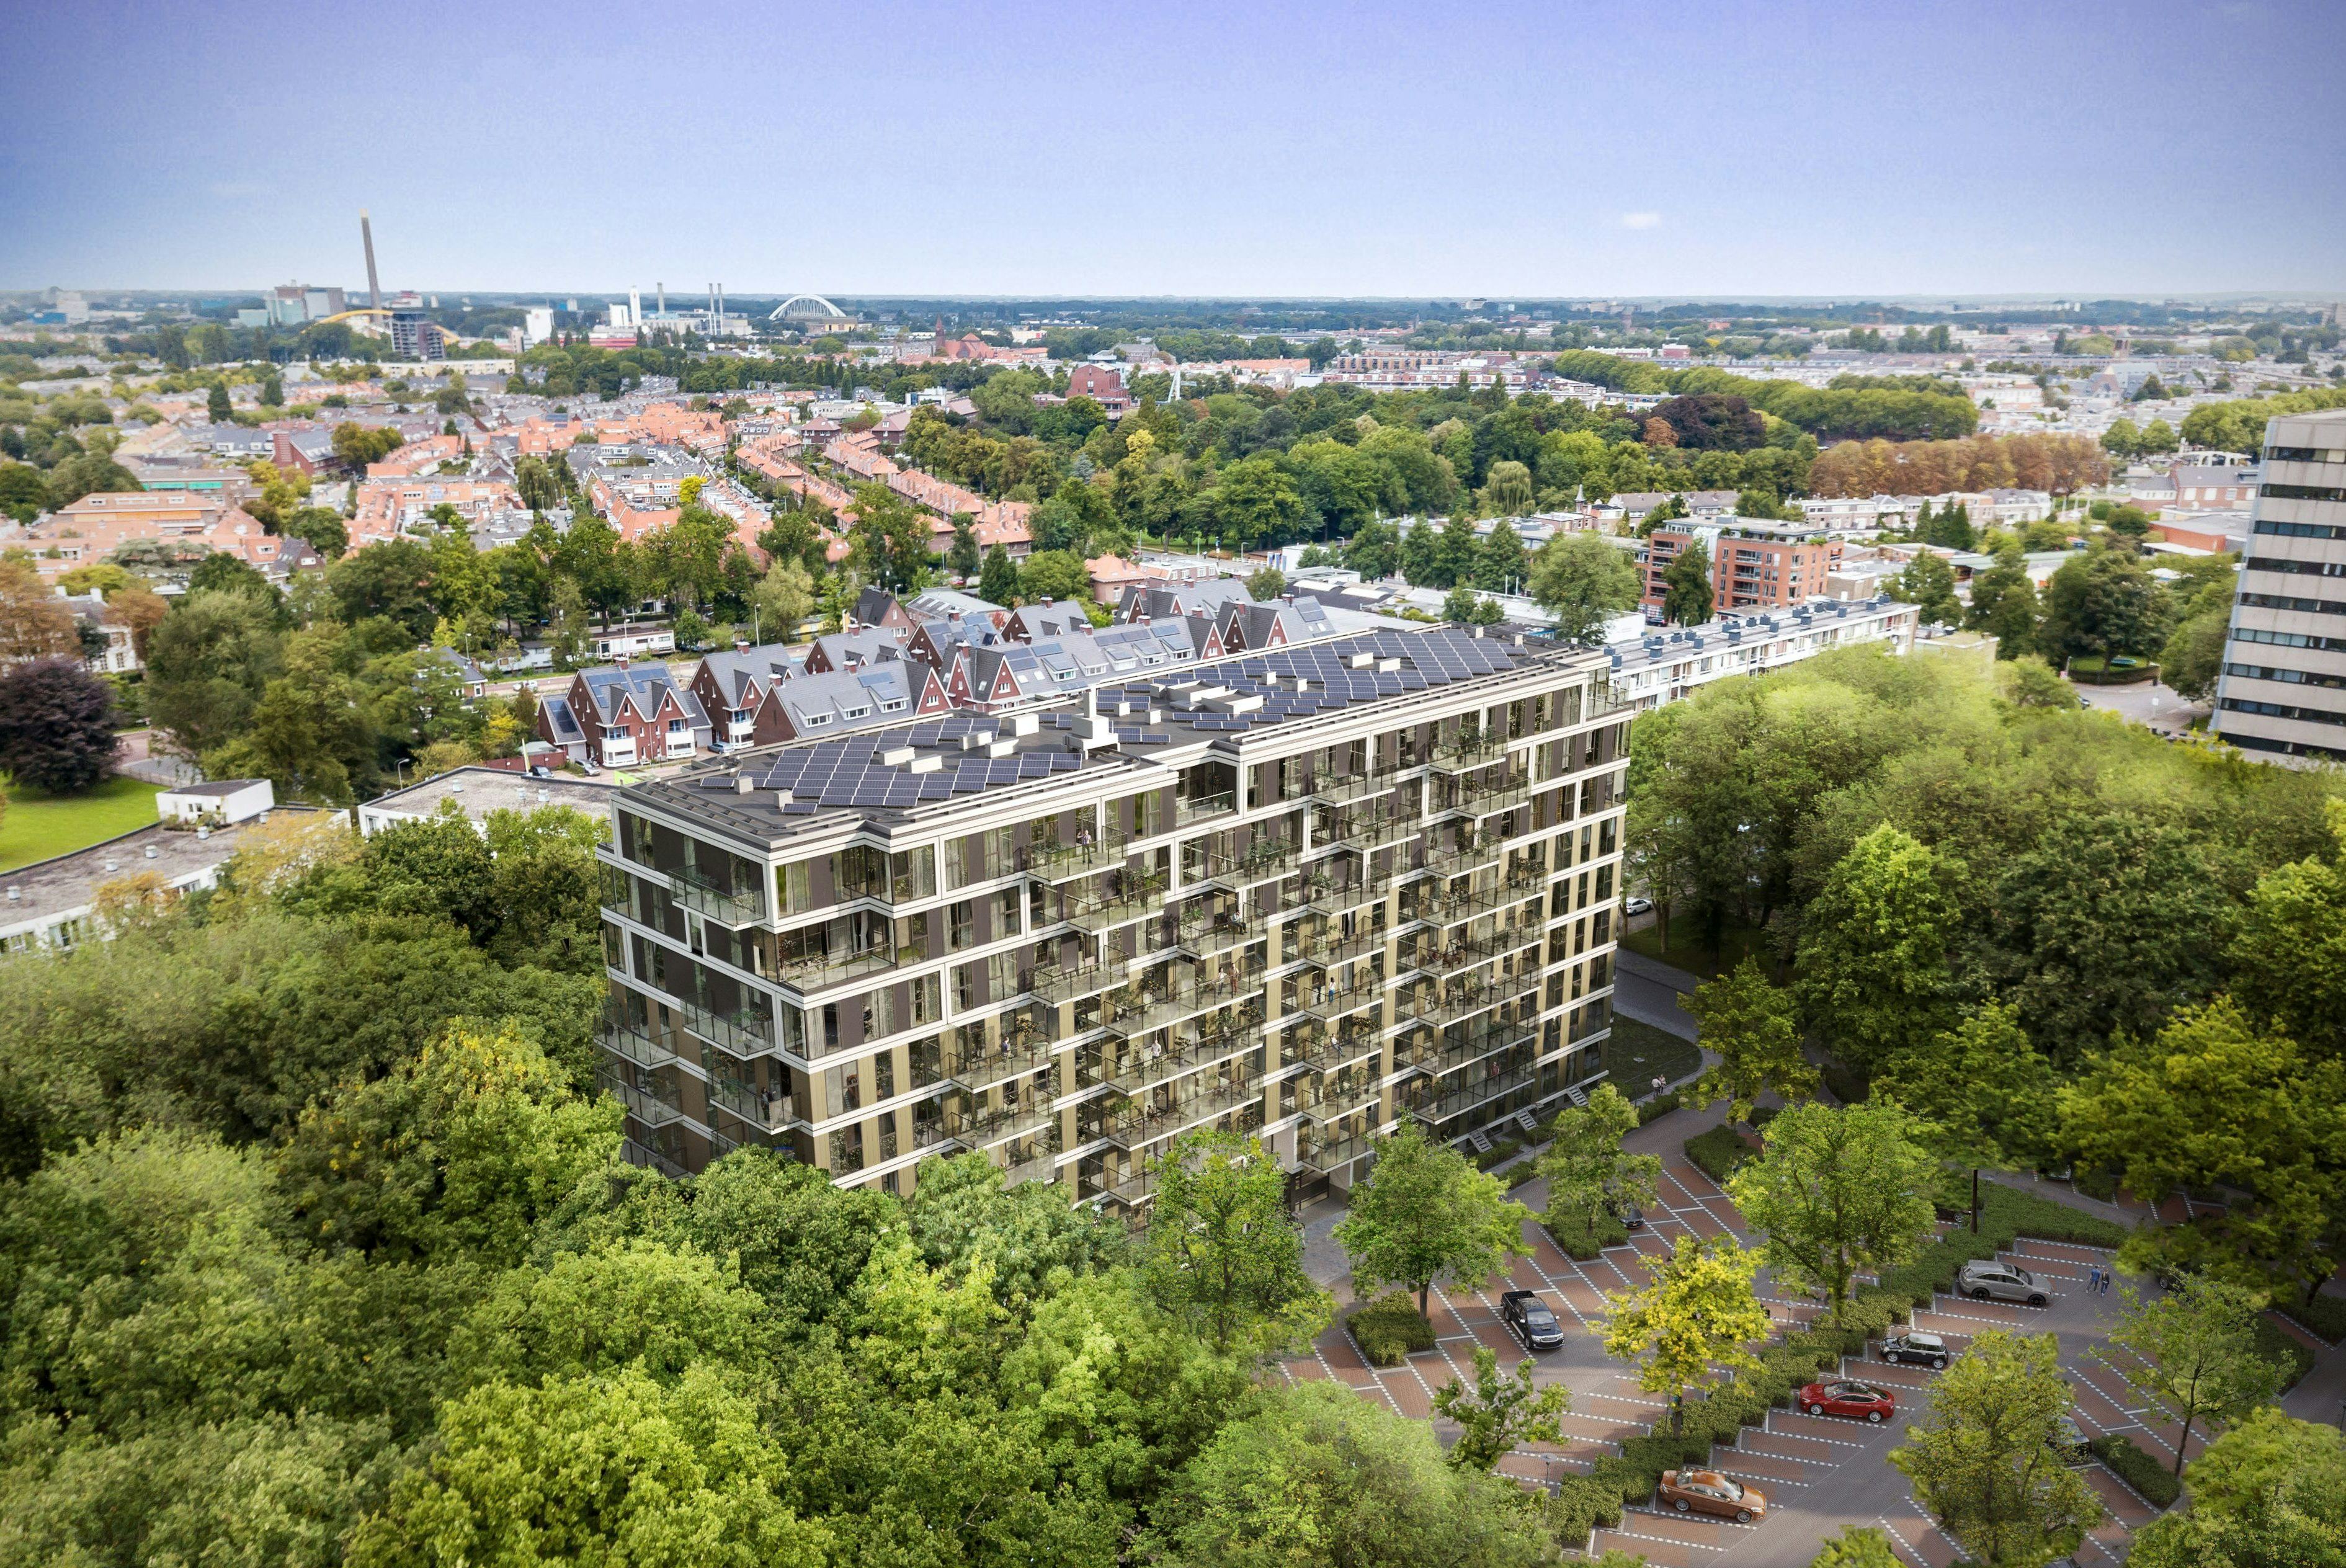 Utrecht betere woningbeleggingsstad dan Amsterdam